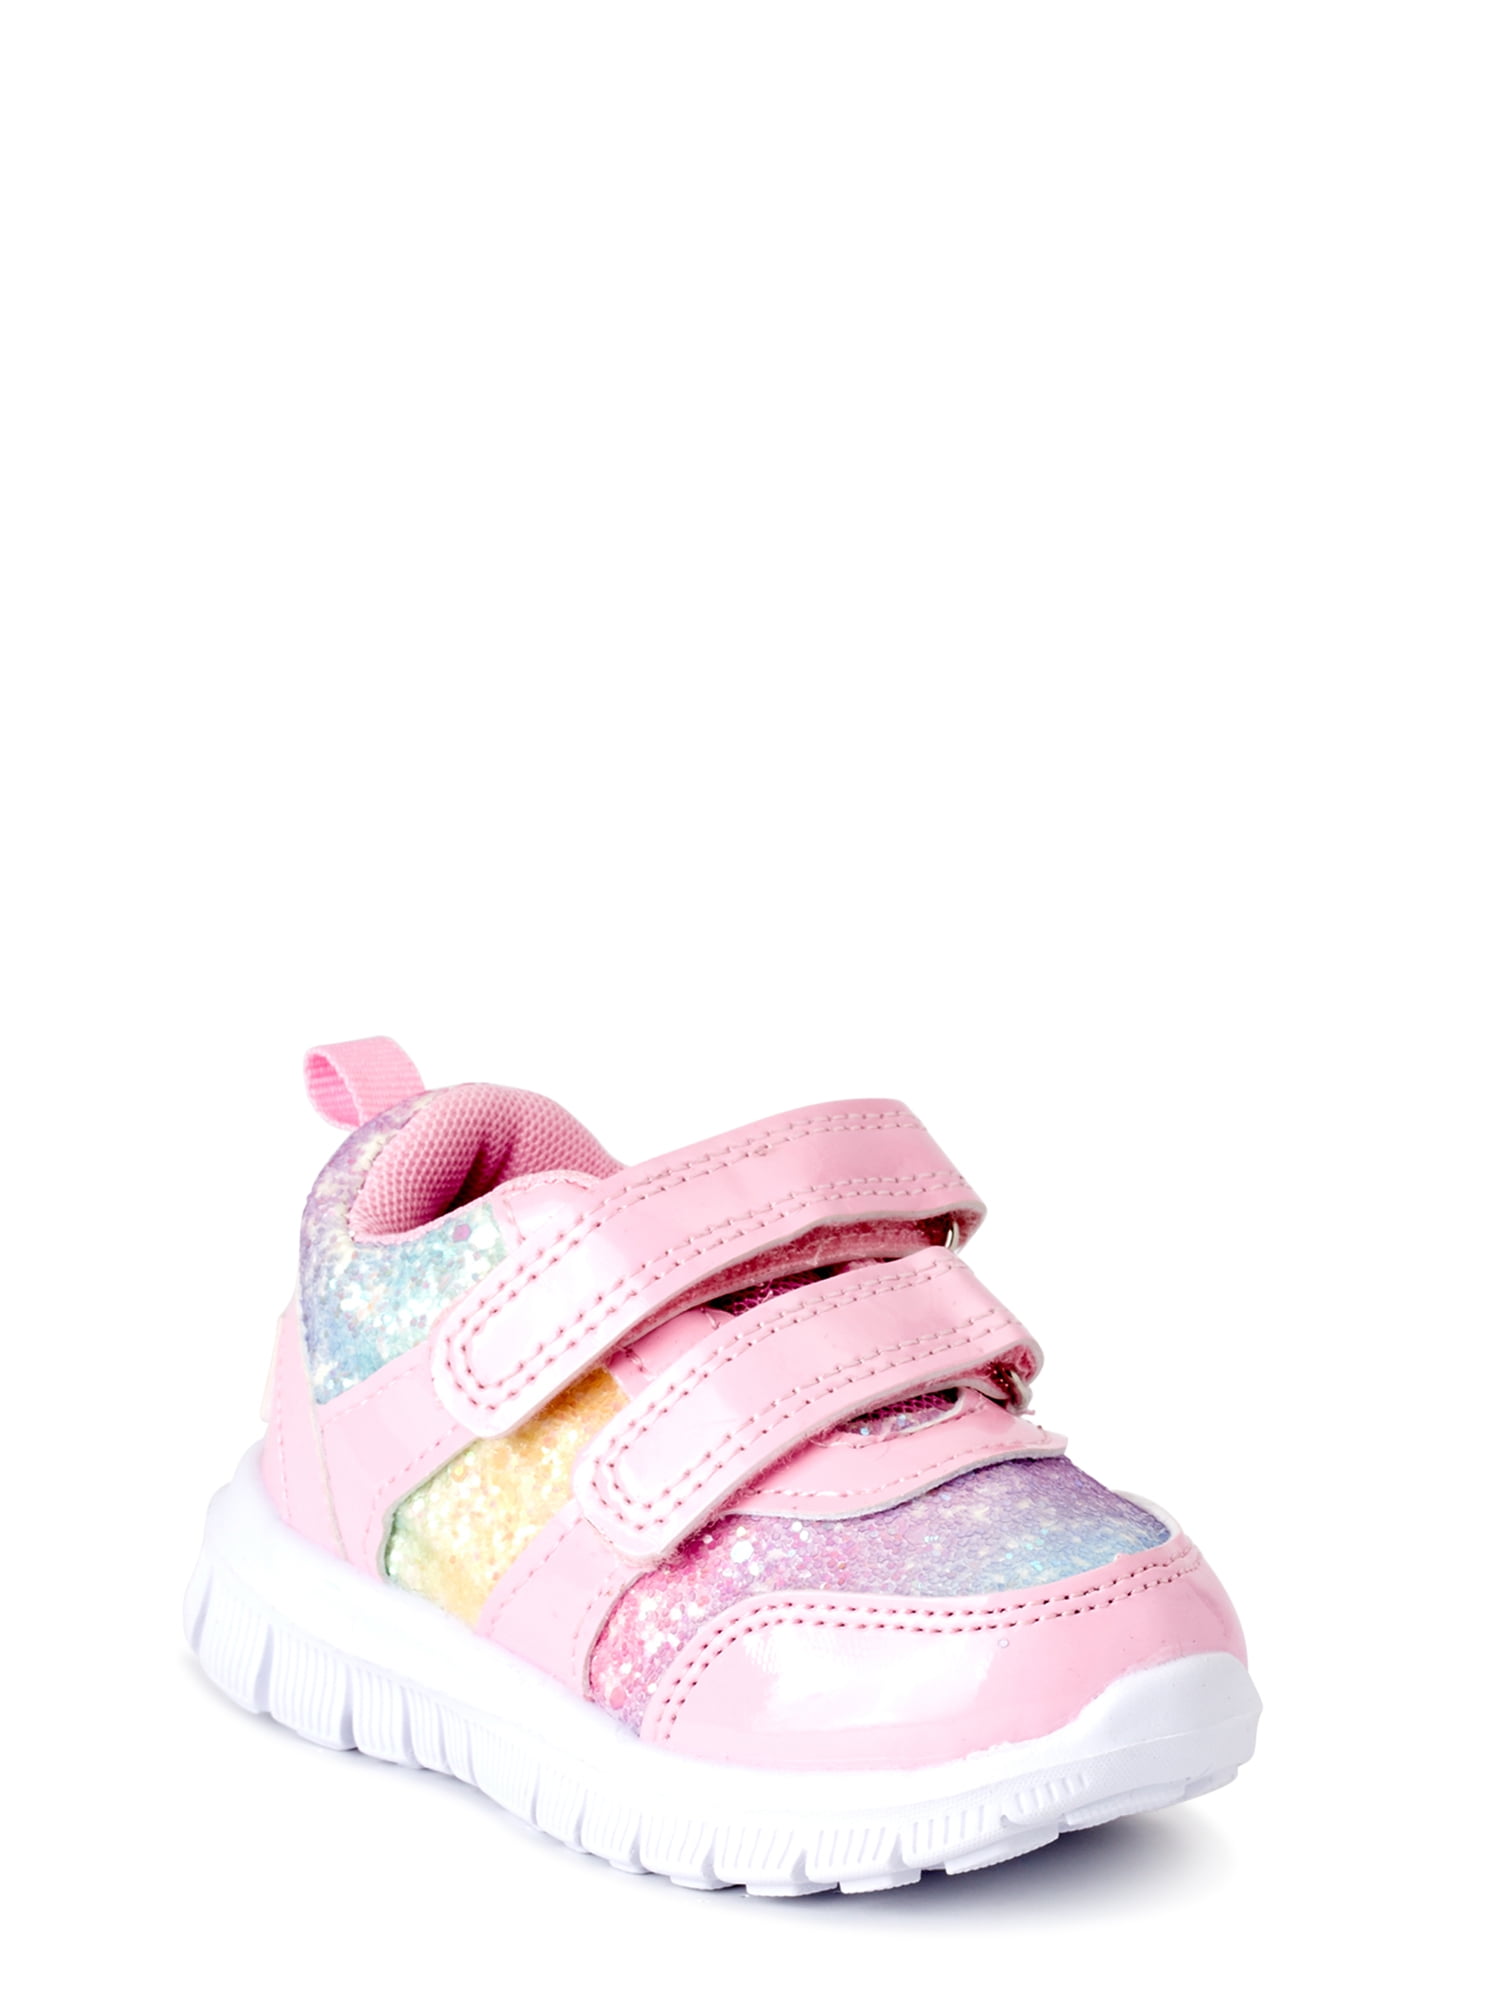 Baby Girl Shoes - Walmart.com